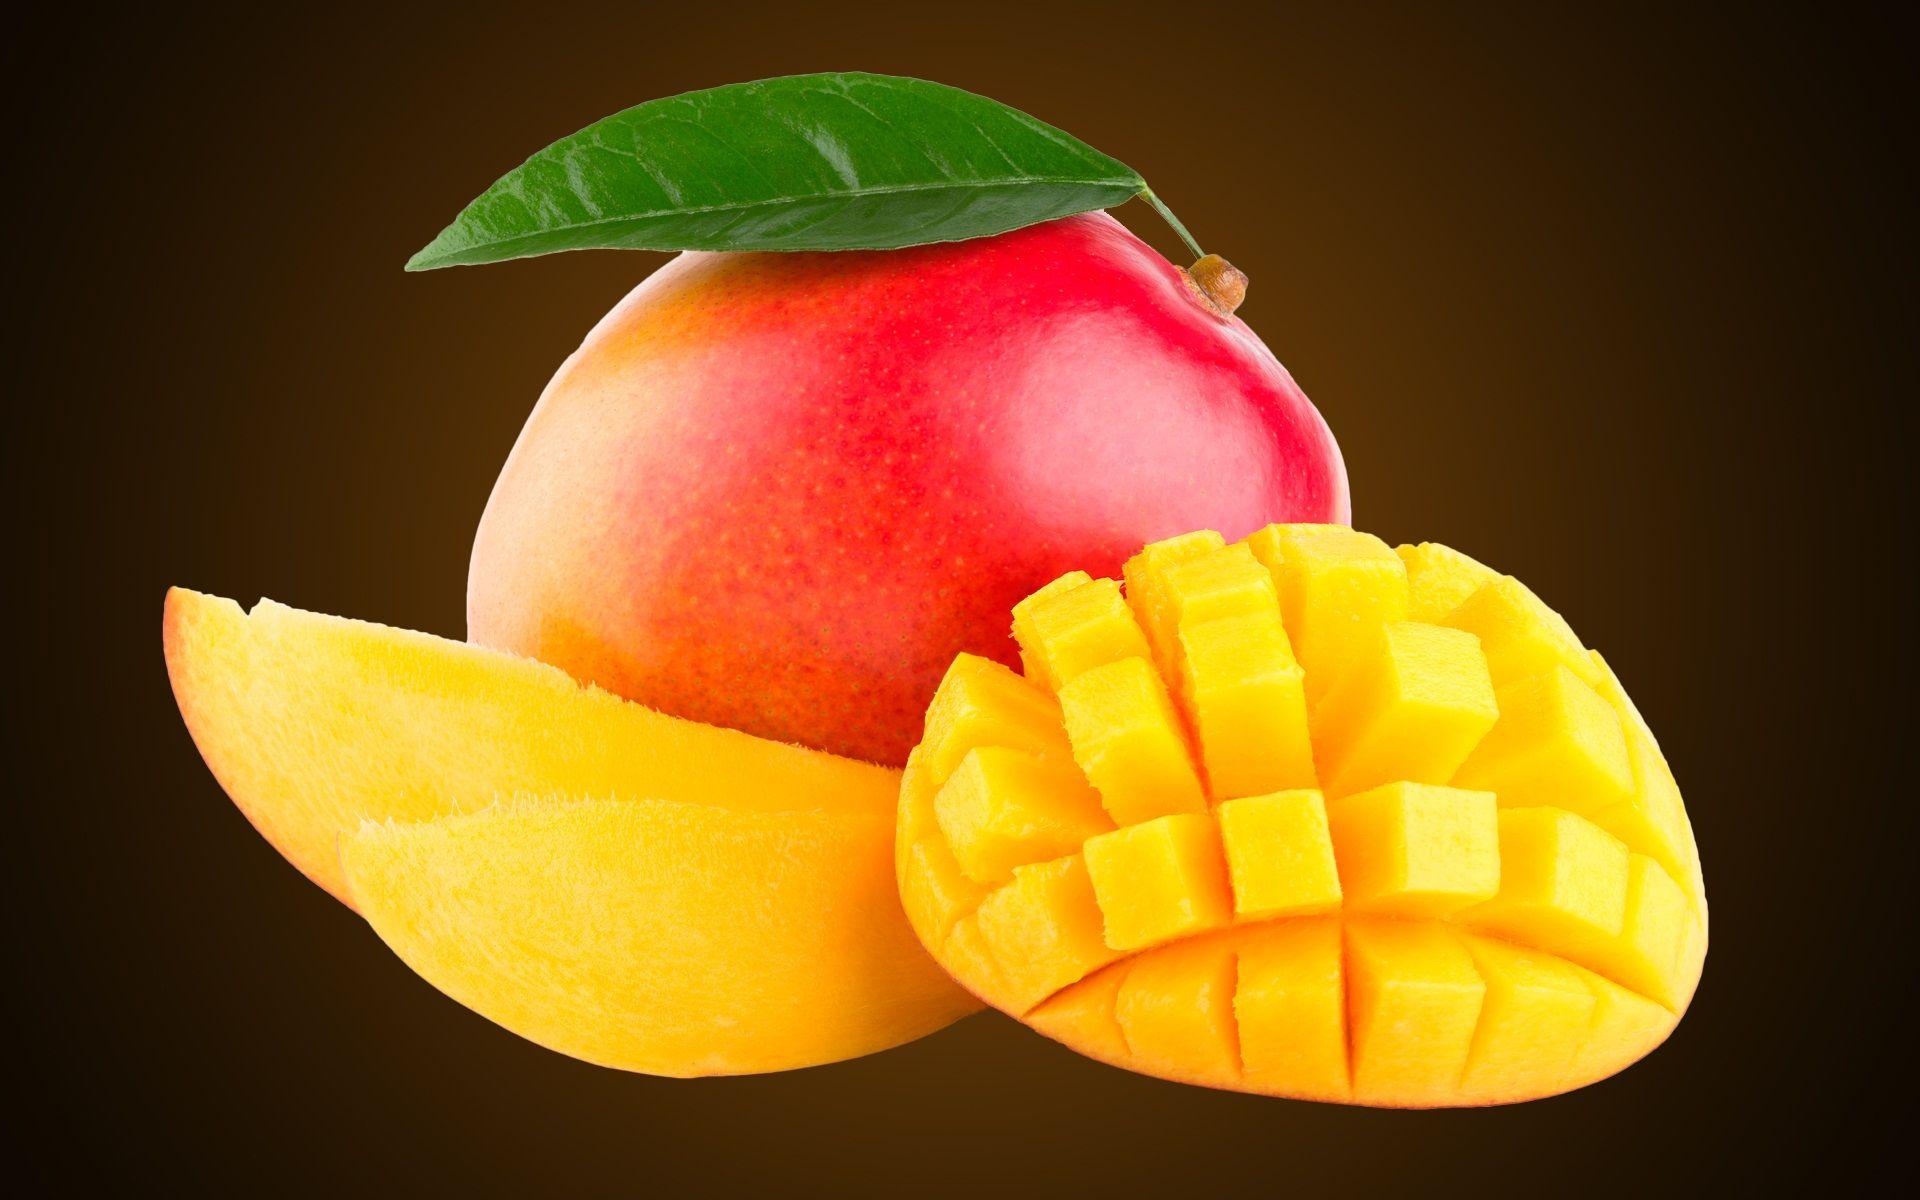 Mango Wallpaper, HD Quality Mango Image, Mango Wallpaper